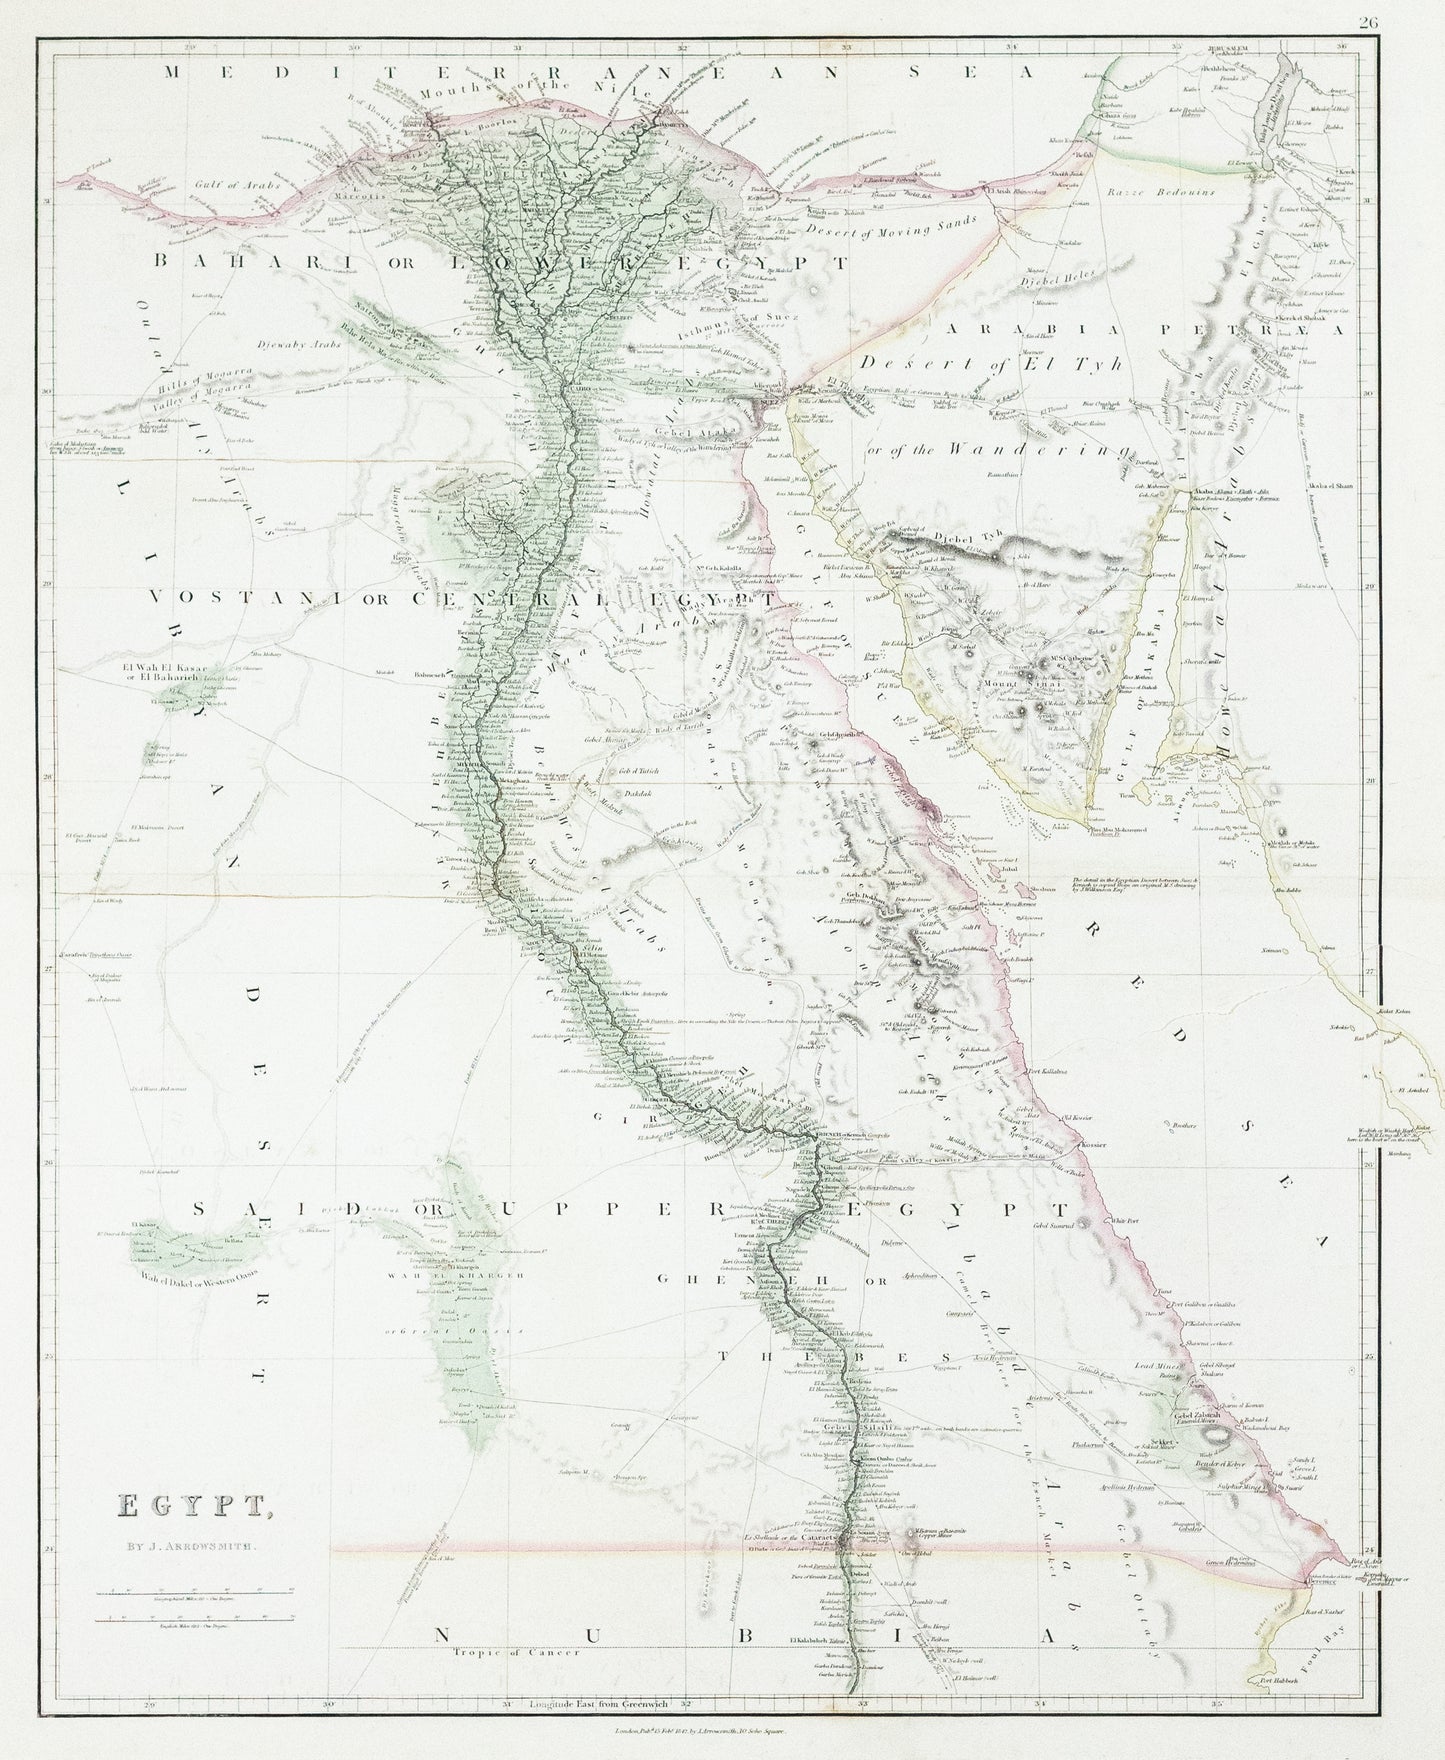 Arrowsmith, J. Egypt, The London Atlas of Universal Geography. London: 1842